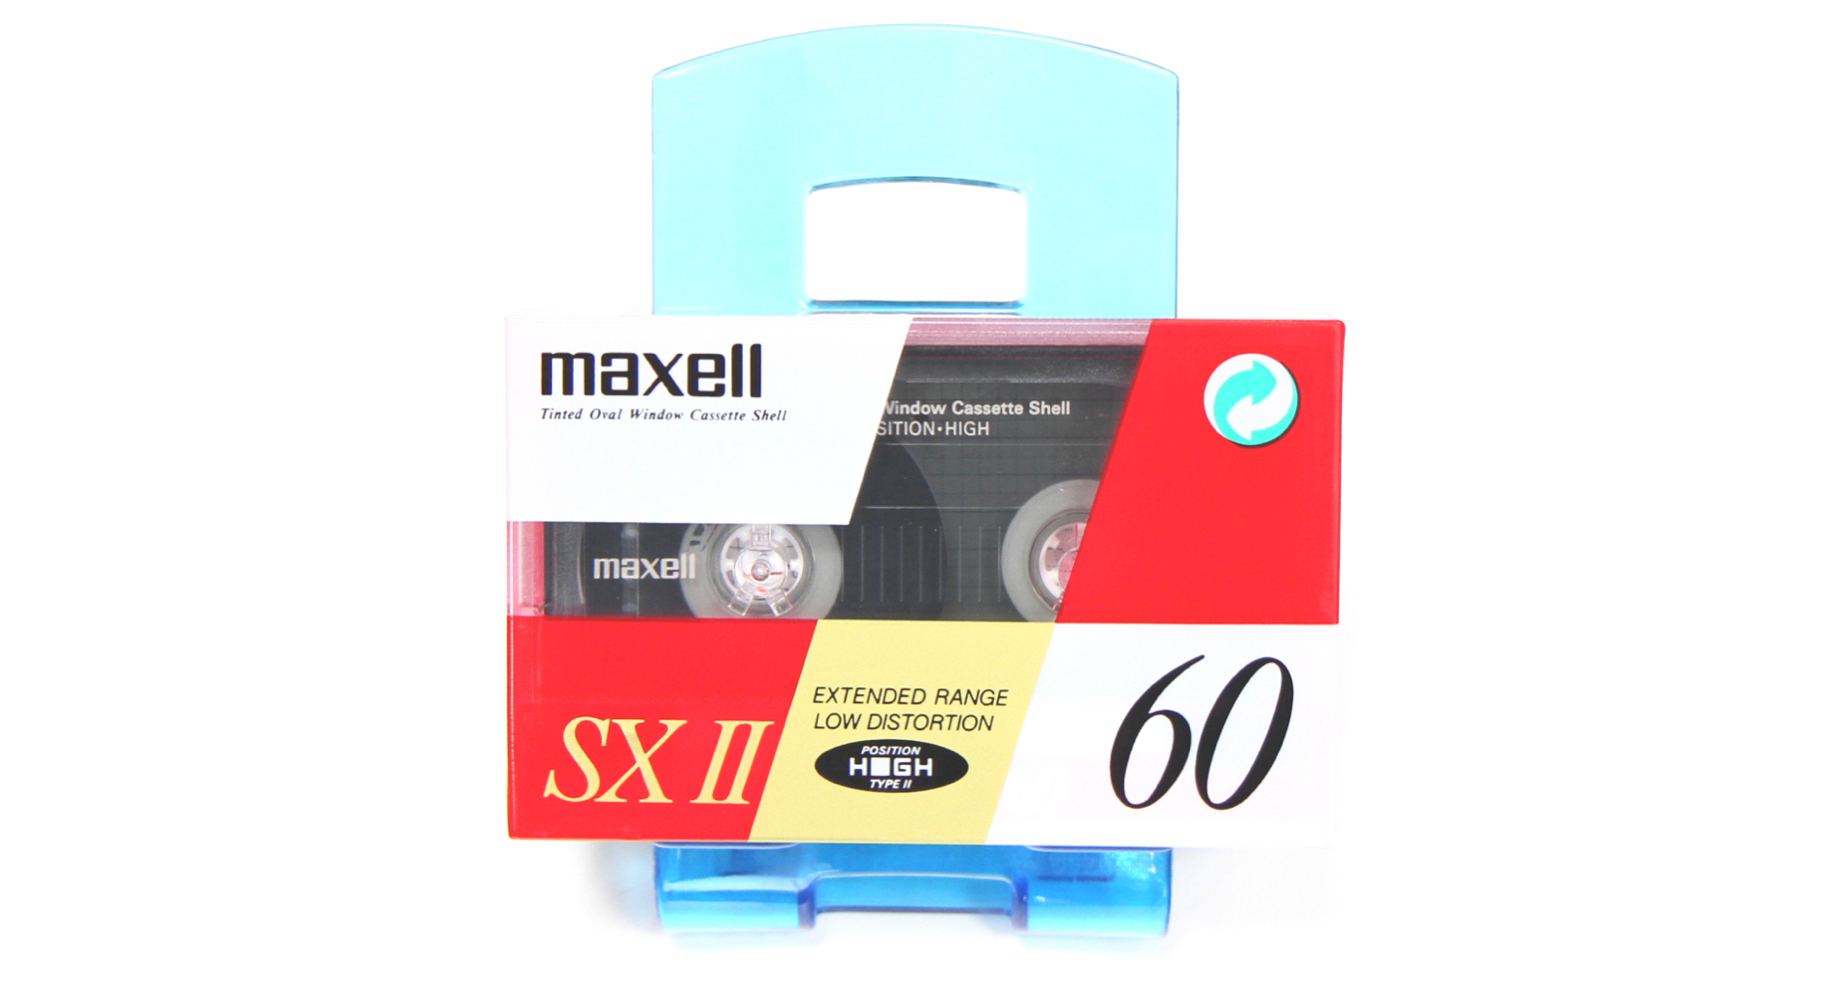 MAXELL SXII-60 Extended Range